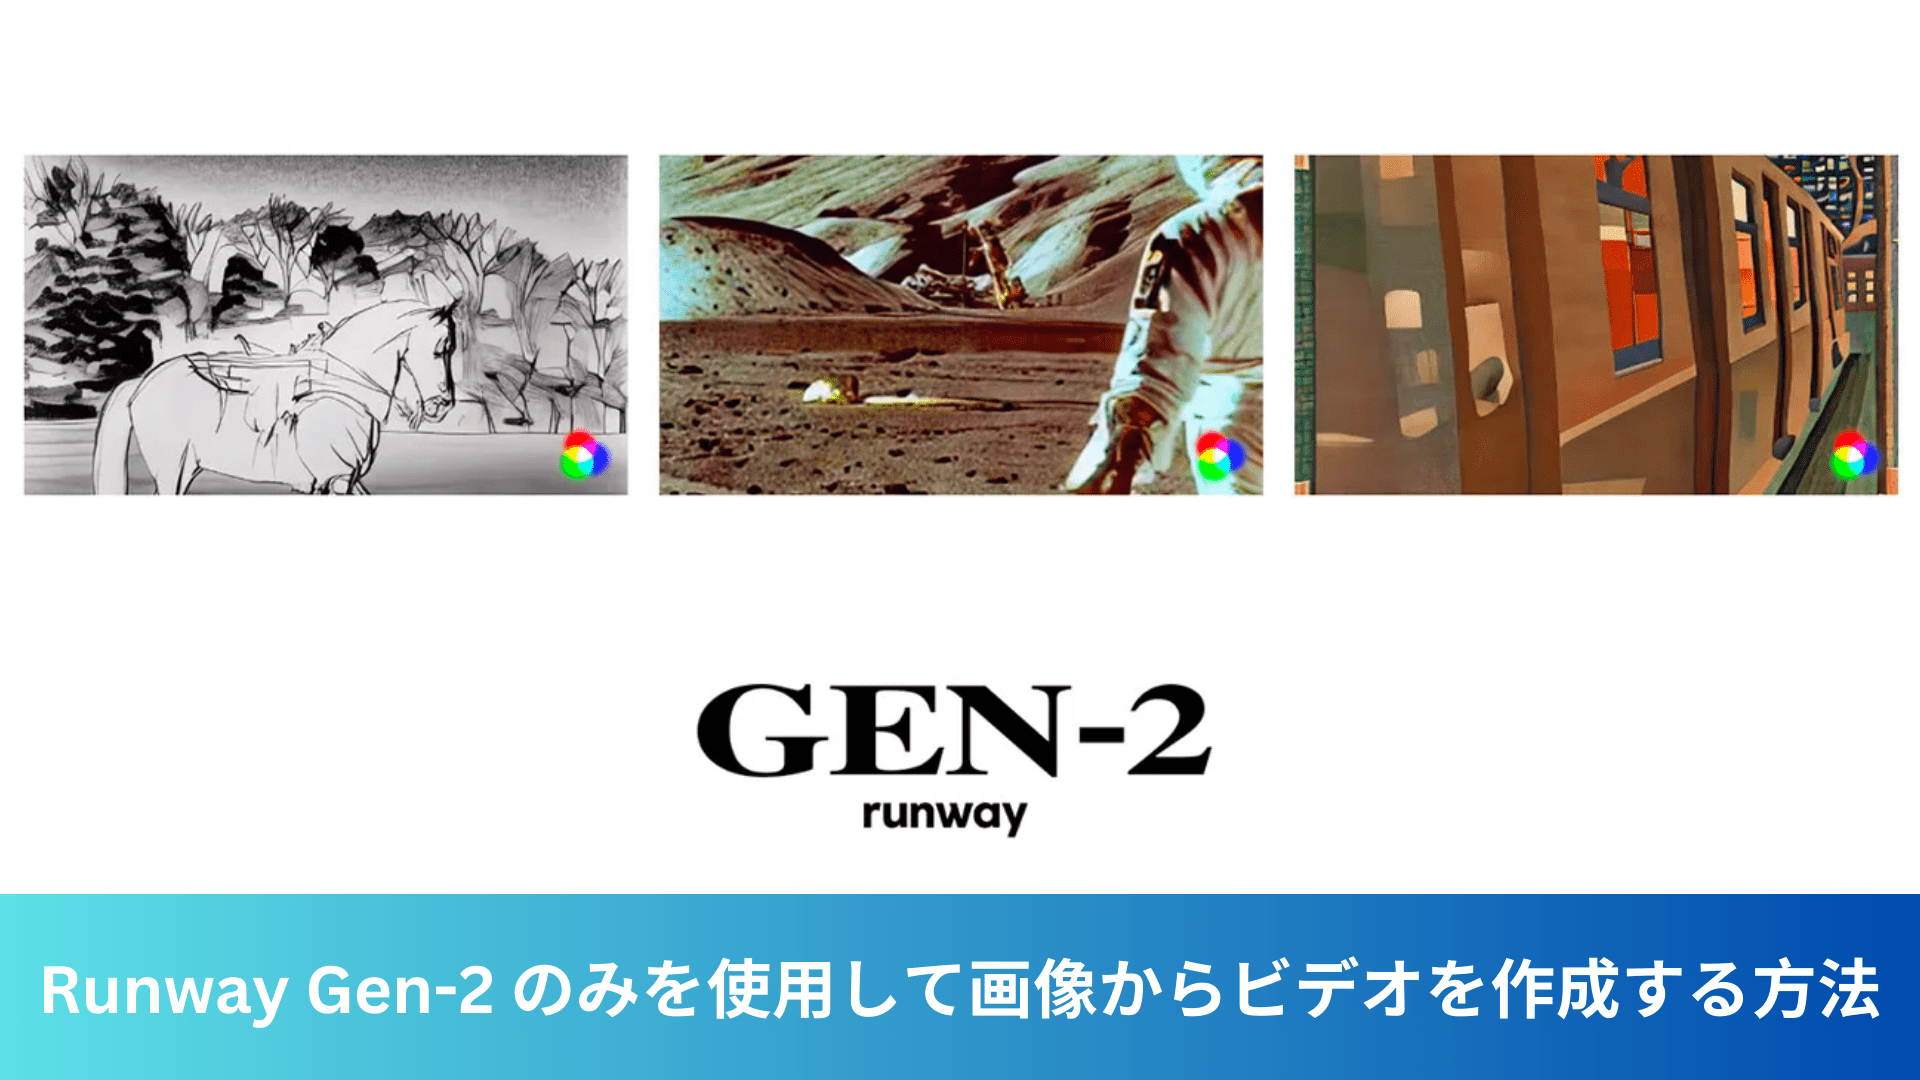 Runway Gen-2 のみを使用して画像からビデオを作成する方法